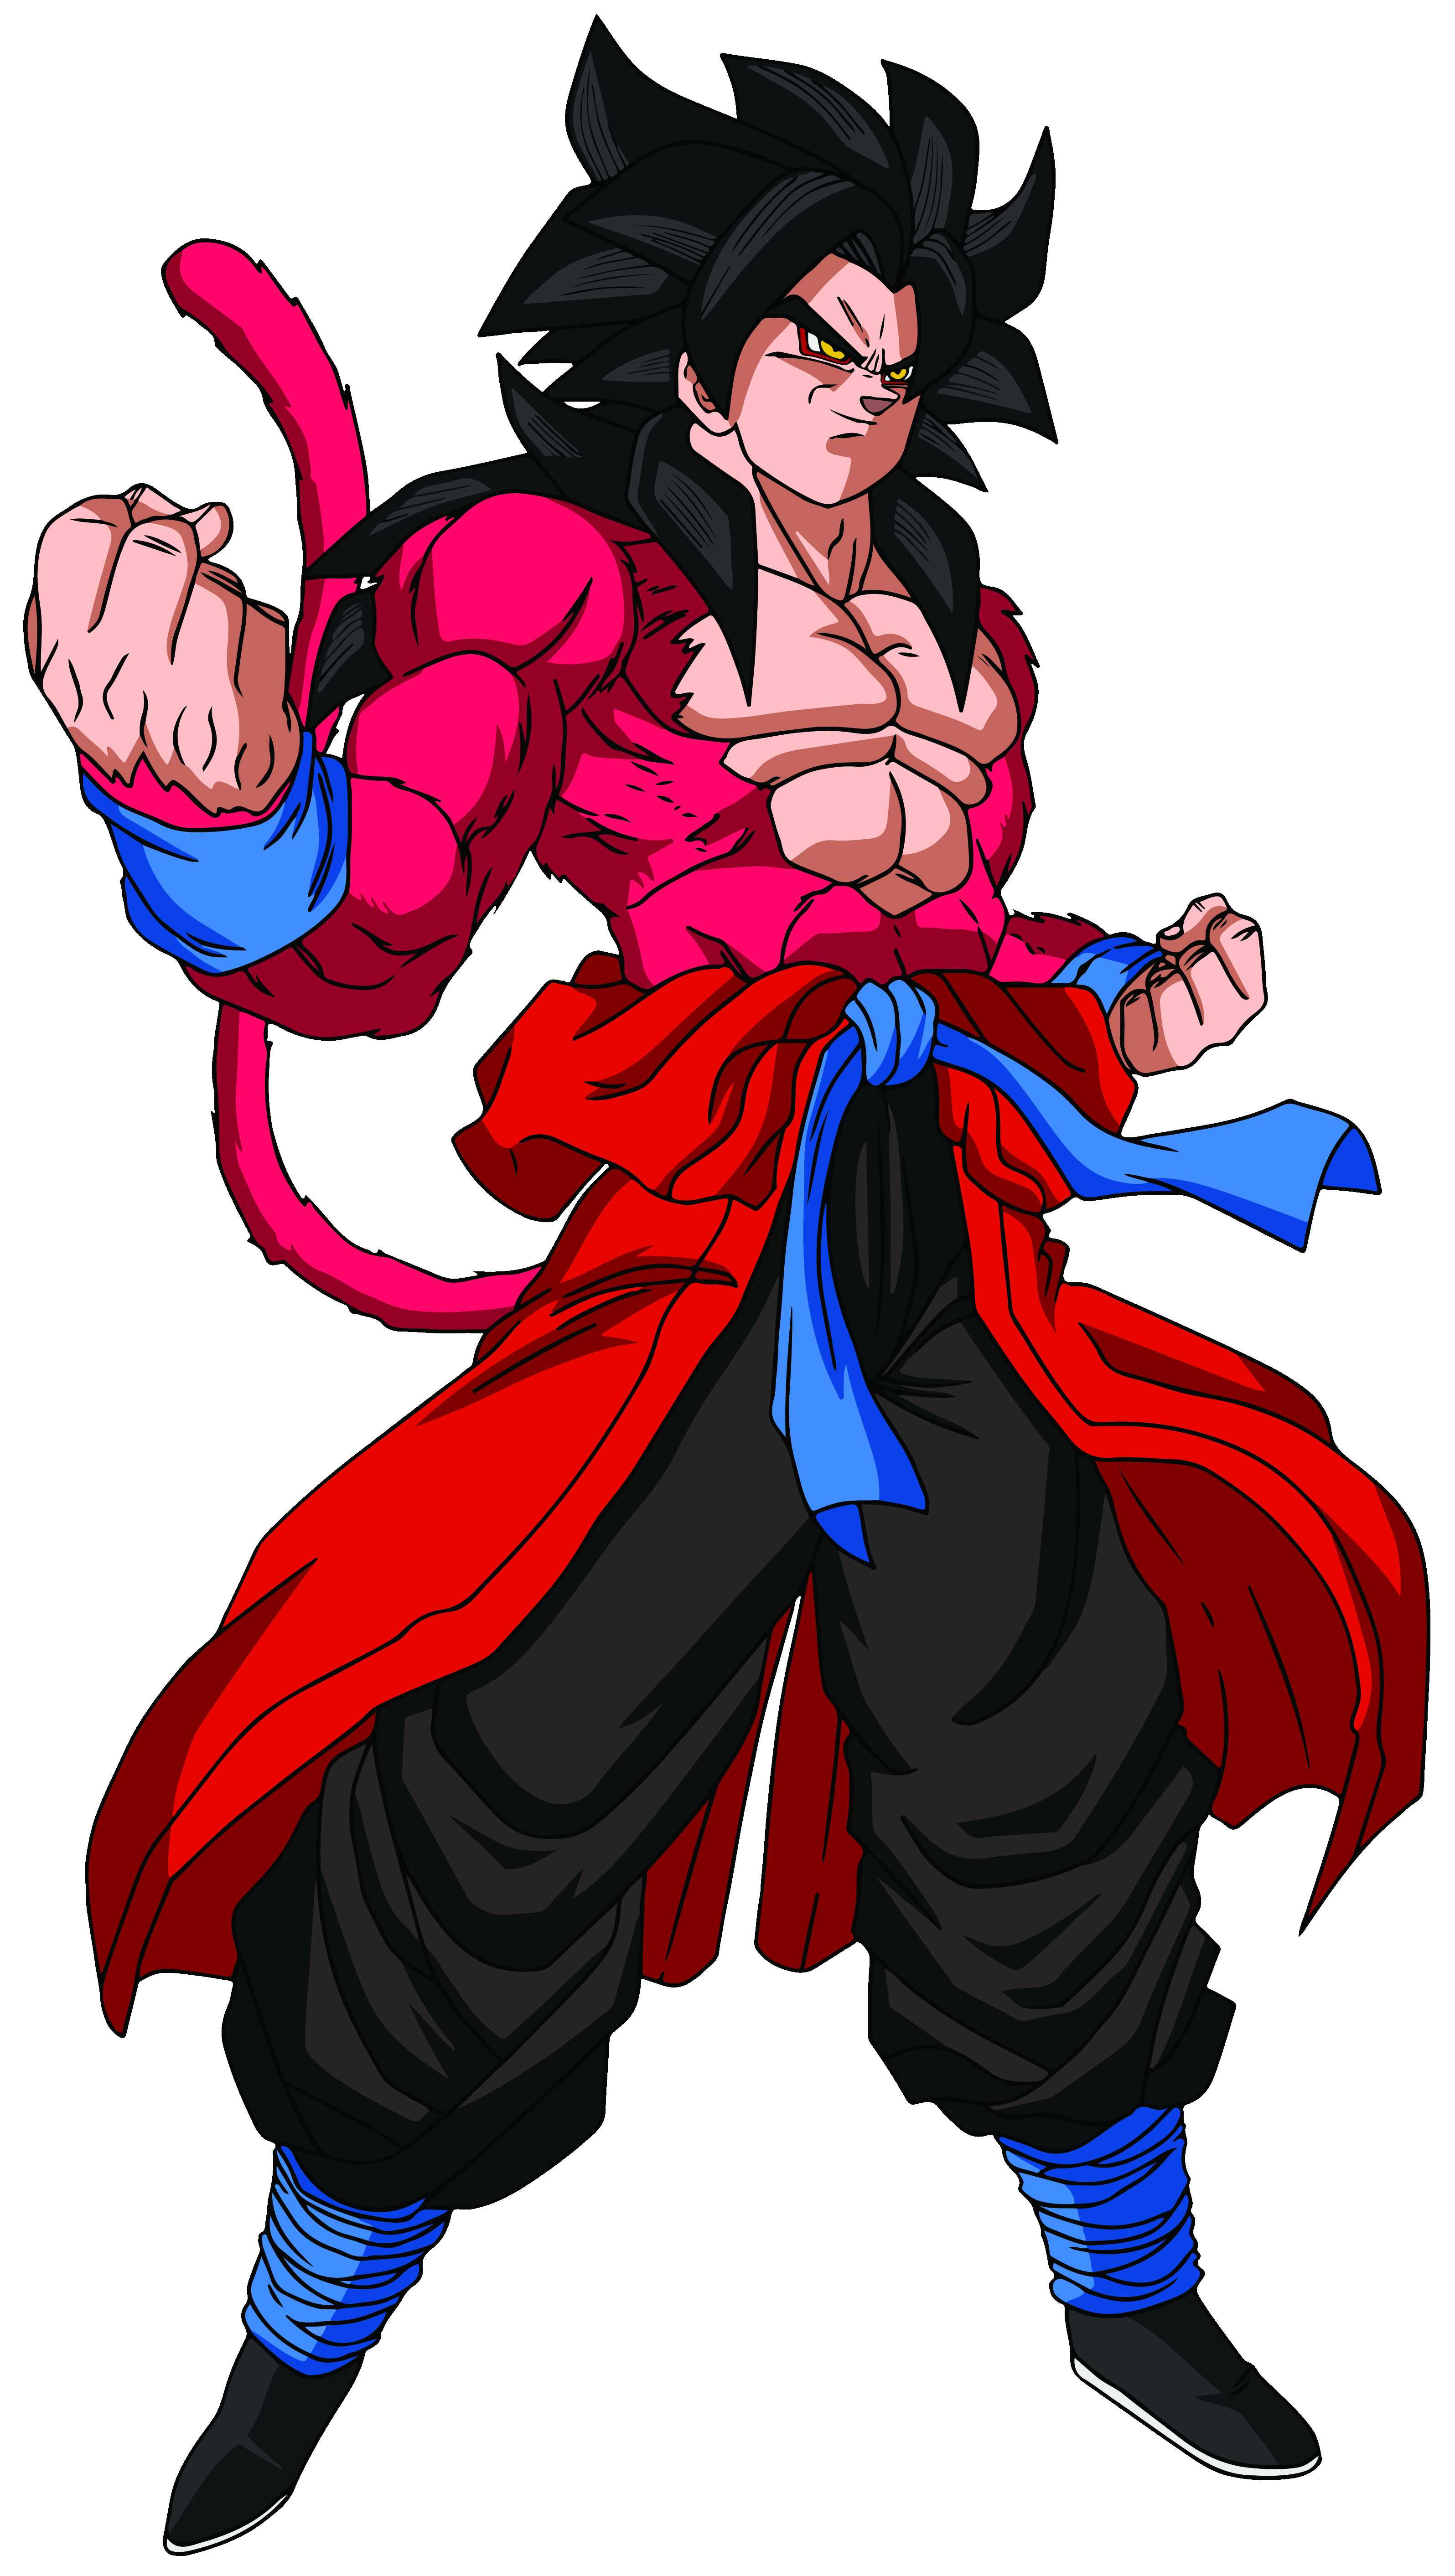 Goku Xeno Ssj4 Limit Breaker by MasterArtZL on DeviantArt